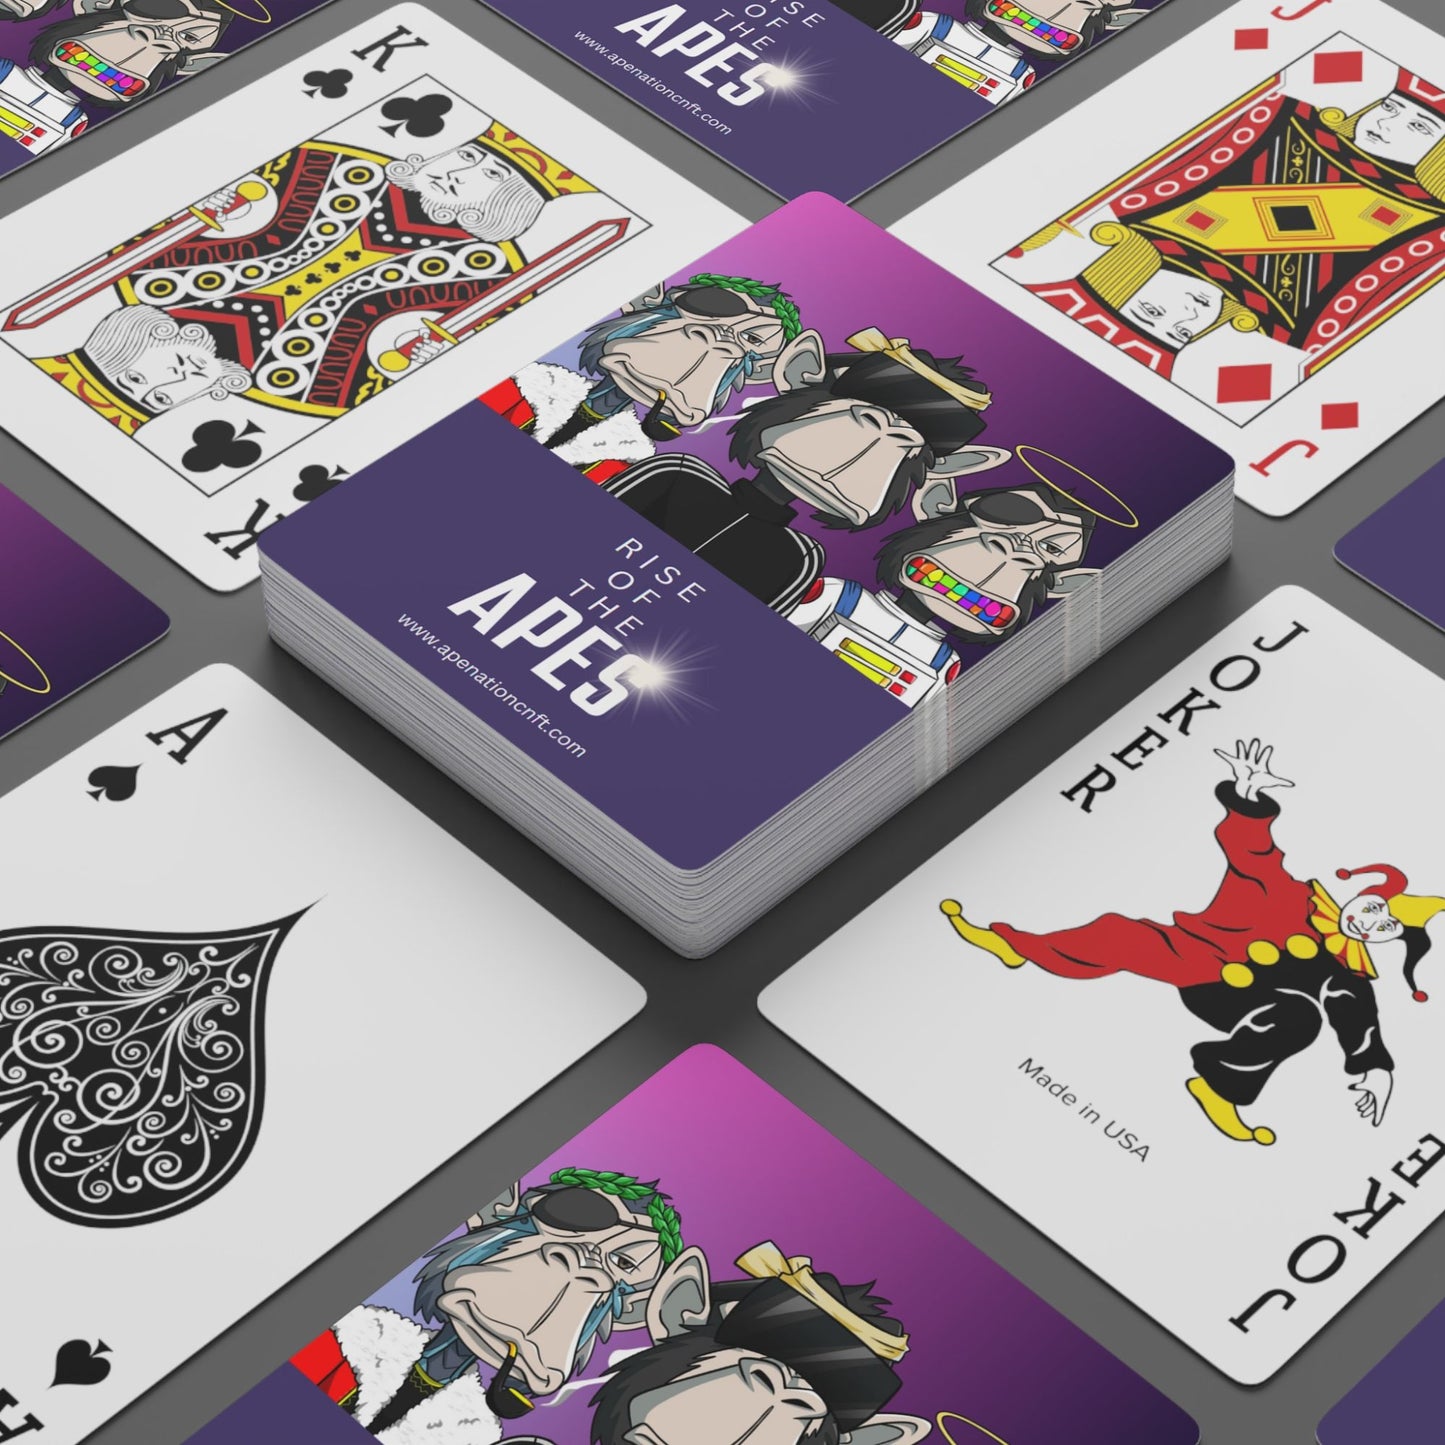 Ape Nation Poker Cards